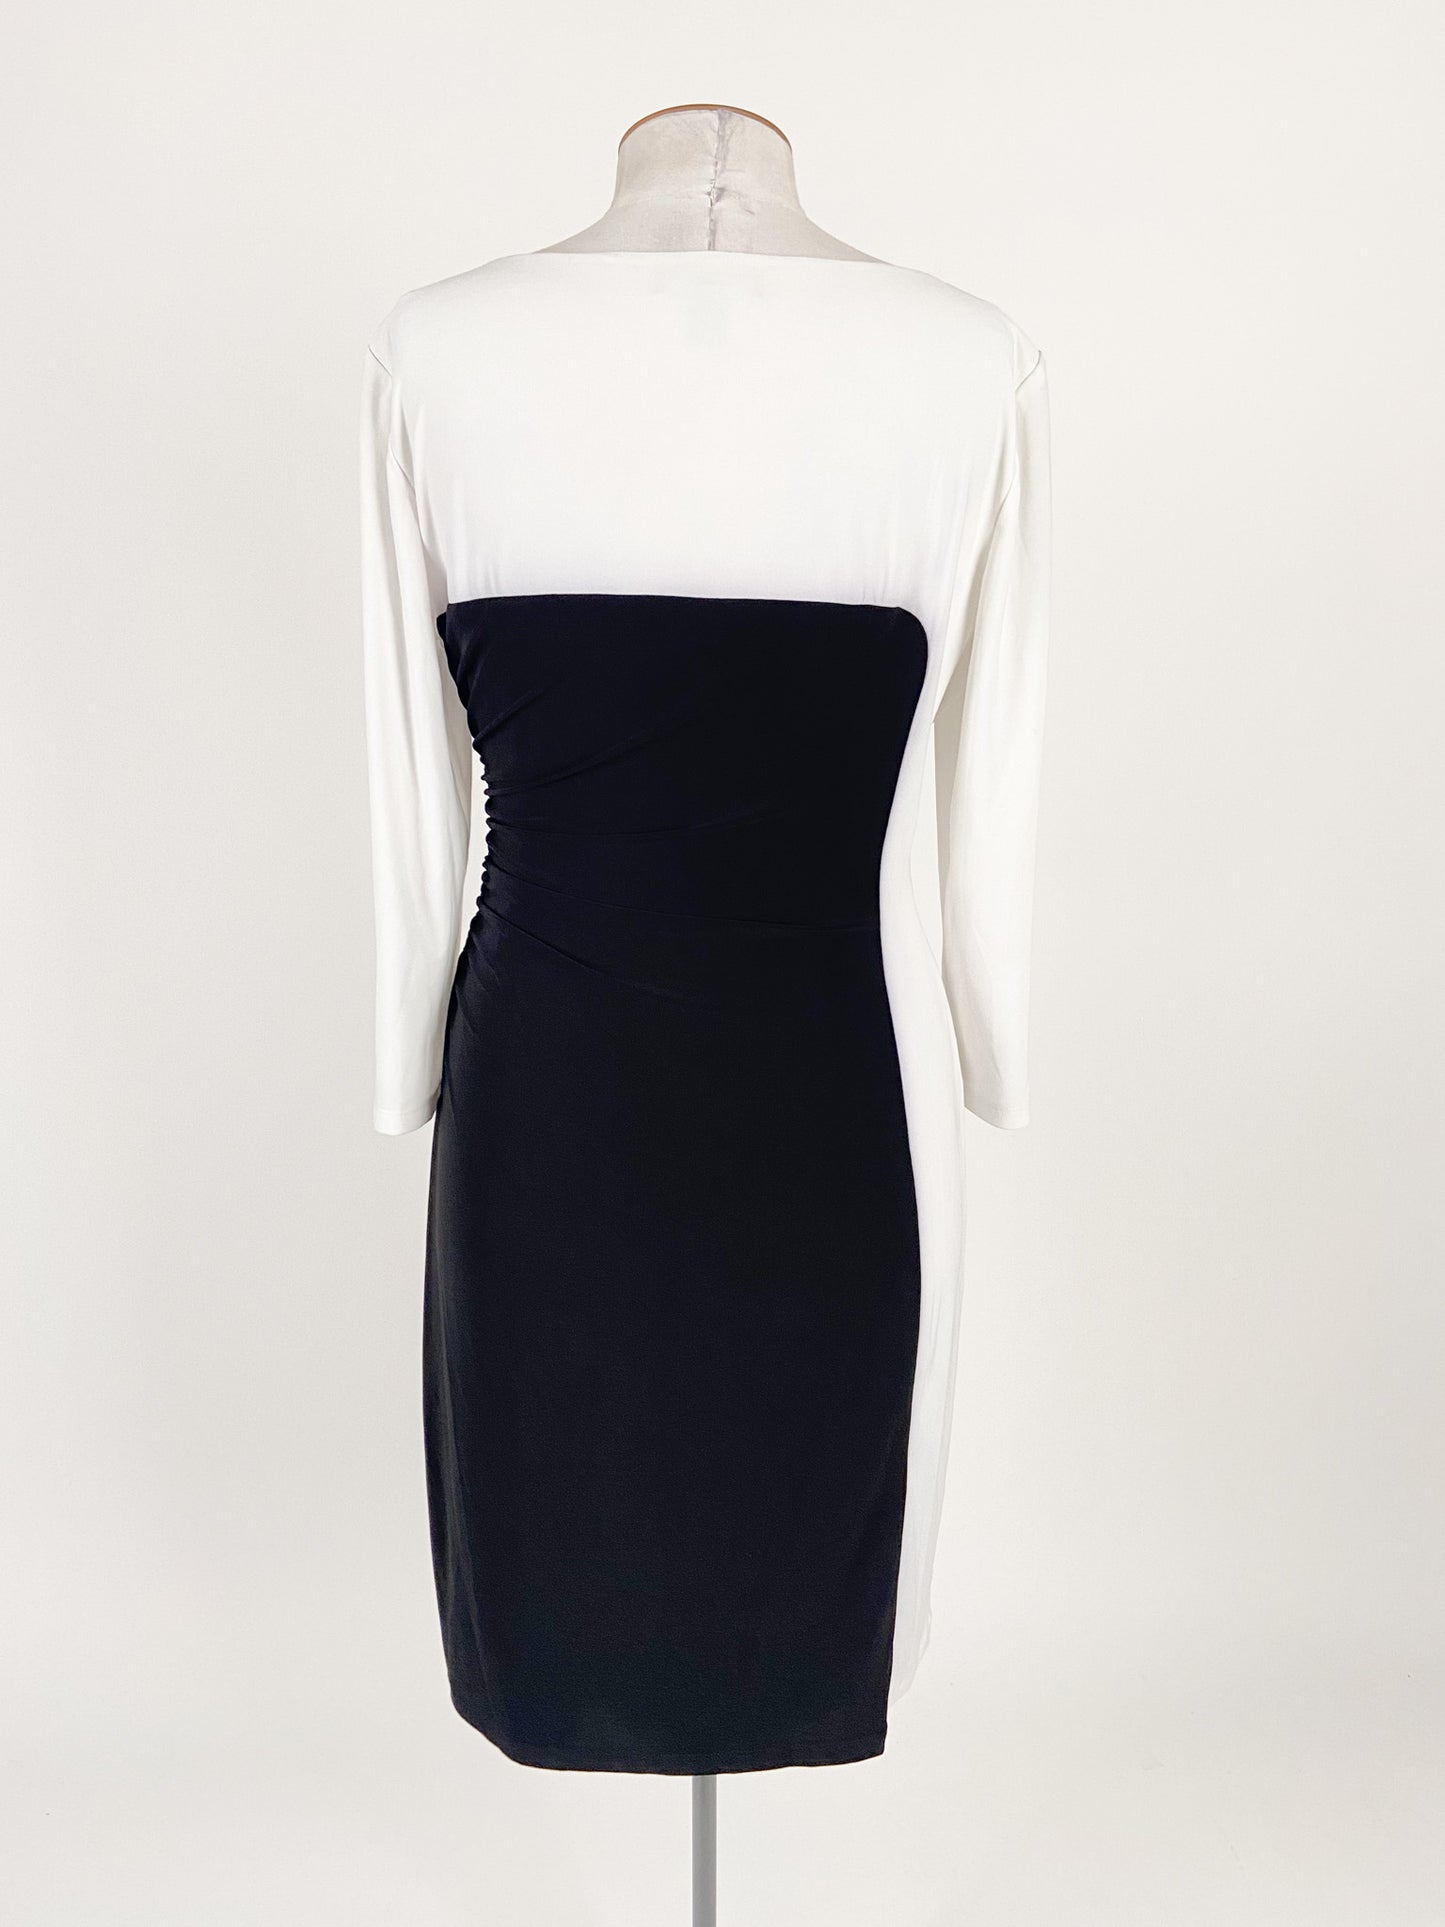 Ralph Lauren | Multicoloured Cocktail/Workwear Dress | Size 14